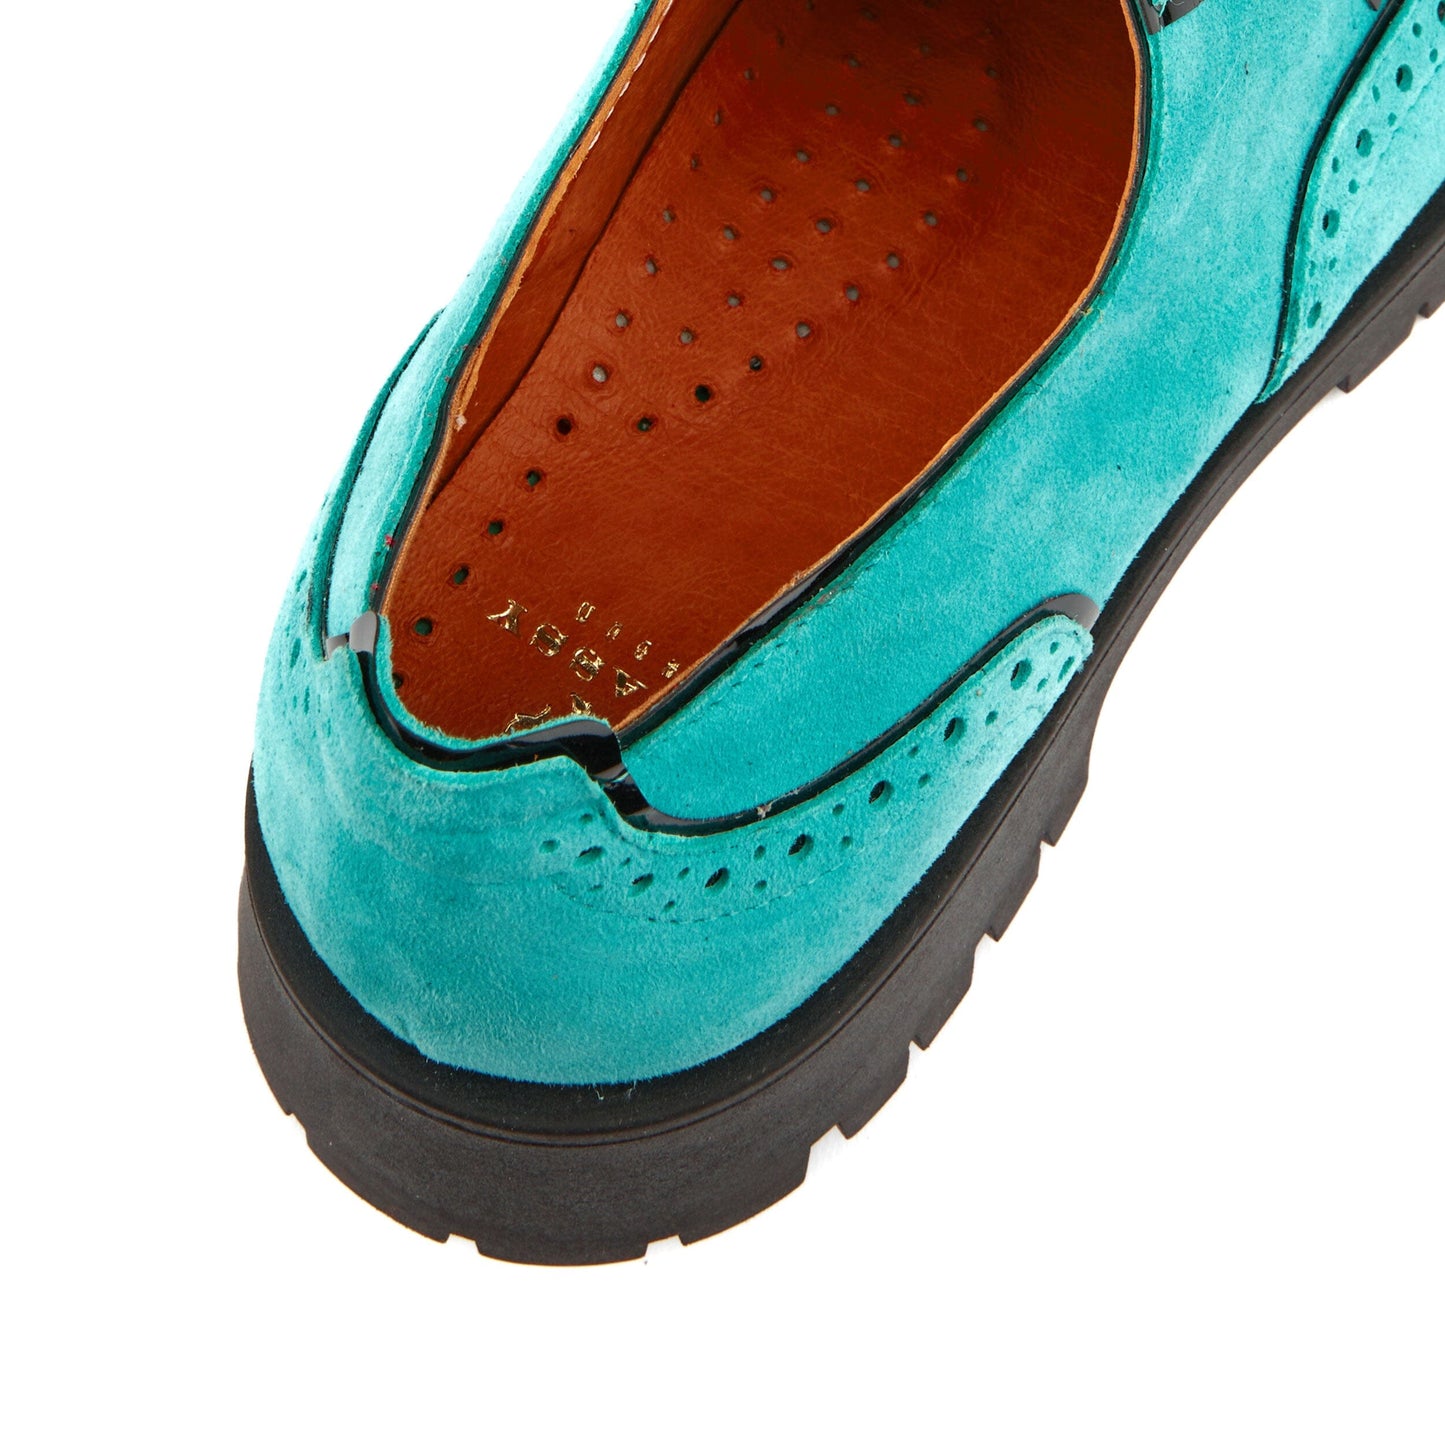 Artisan - Aqua Womens Shoes Embassy London 